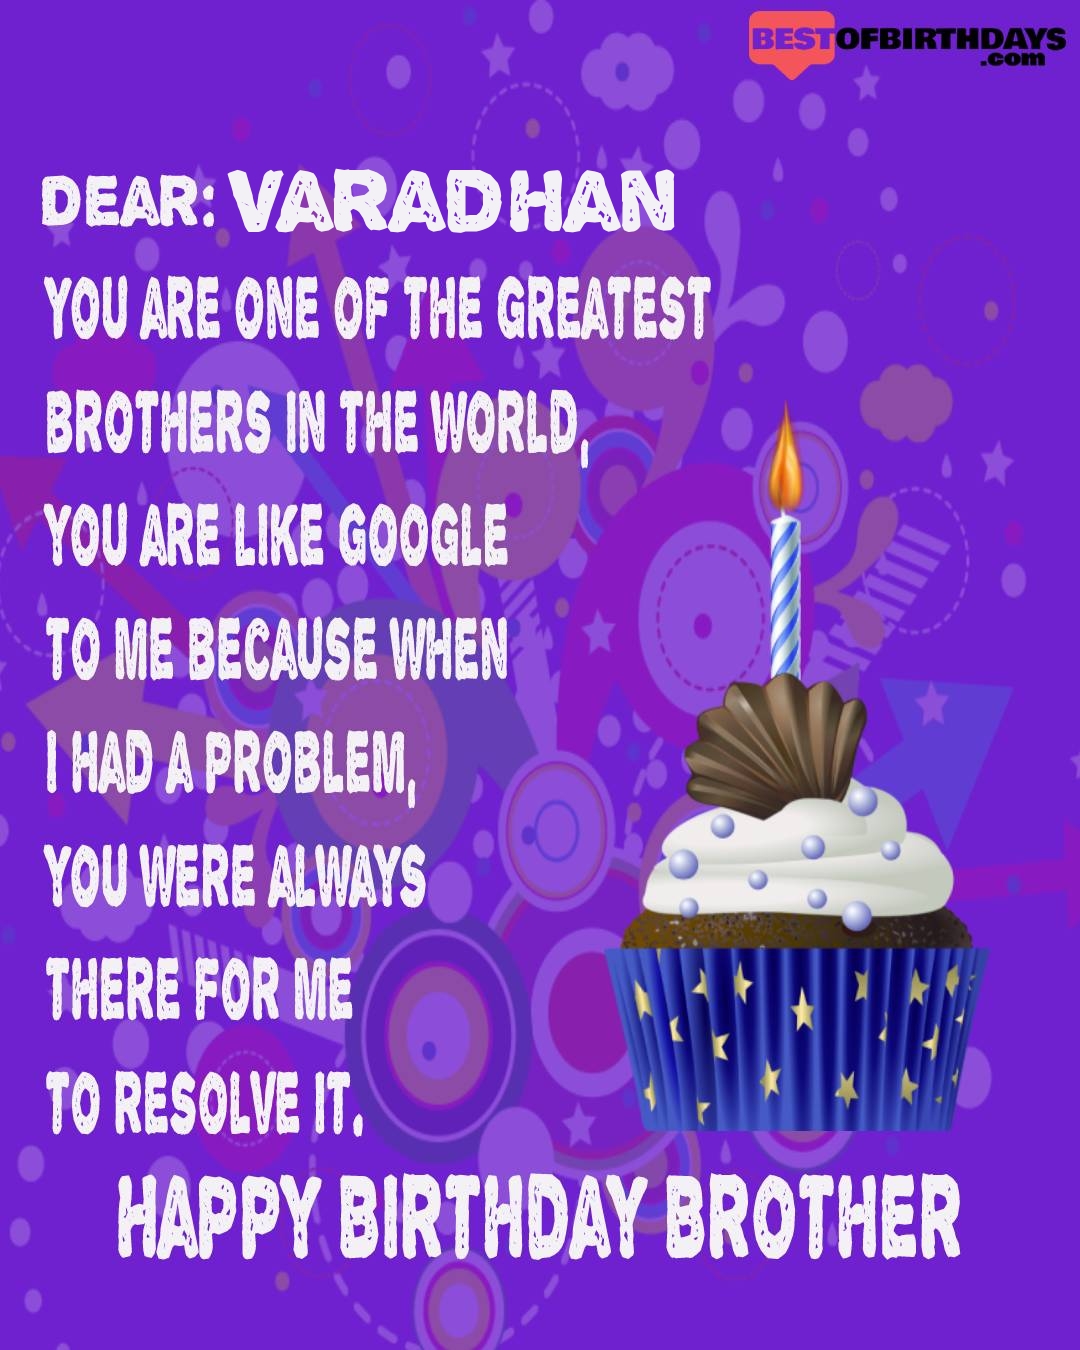 Happy birthday varadhan bhai brother bro